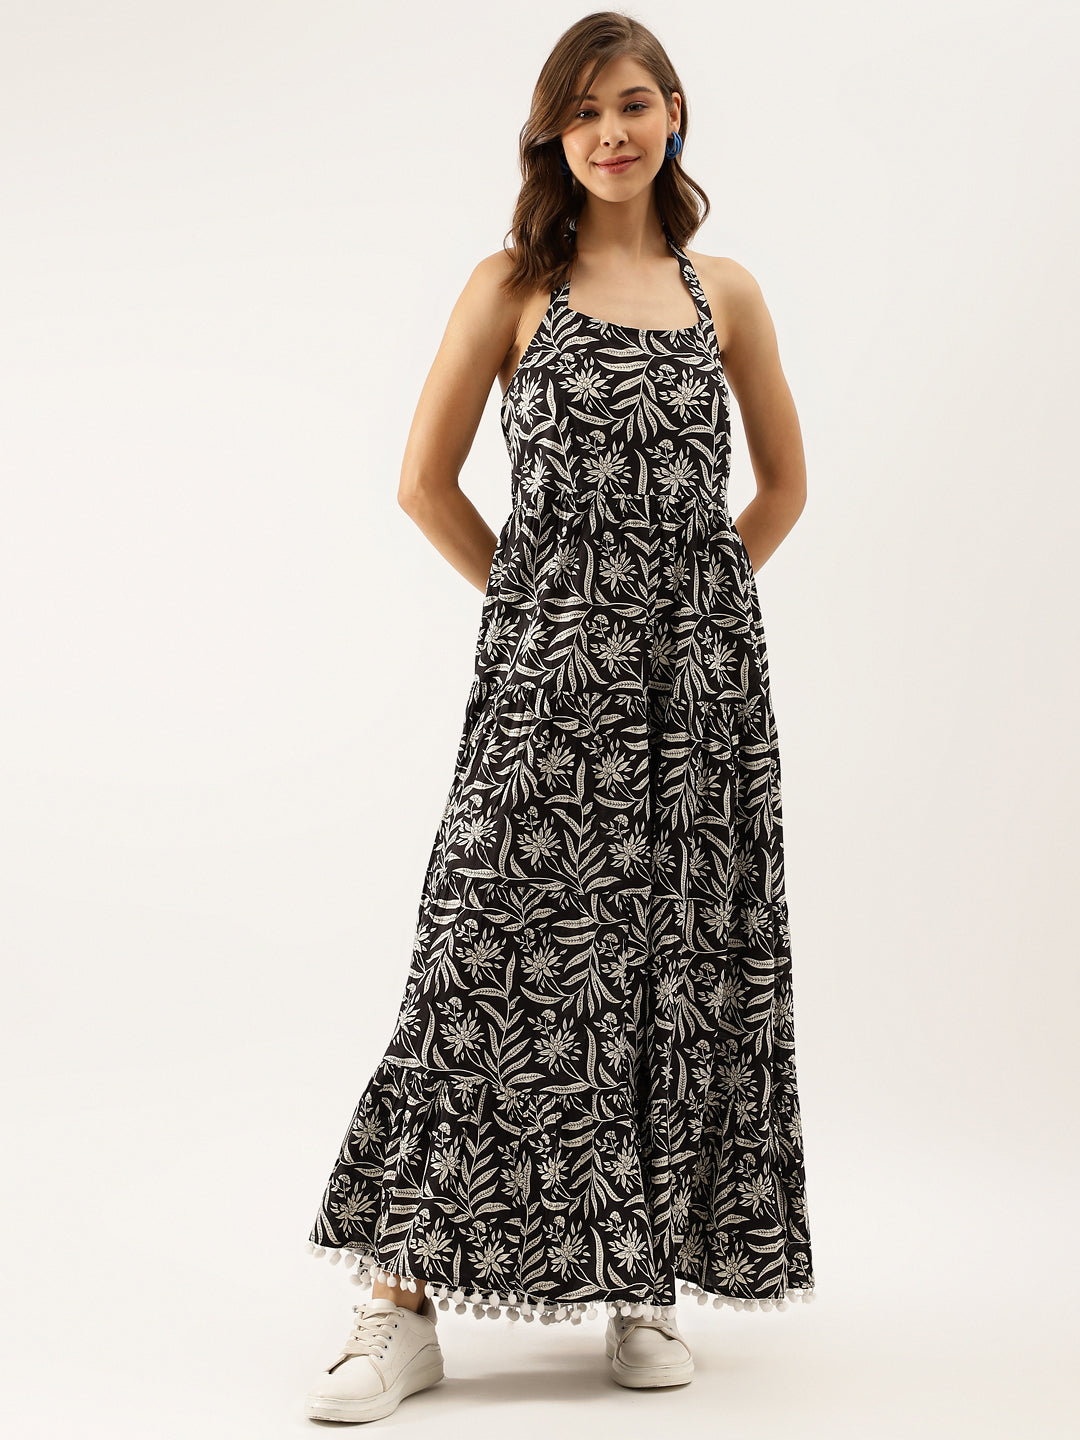 Women's Black Floral Printed Cotton Ethnic Dress - Noz2Toz